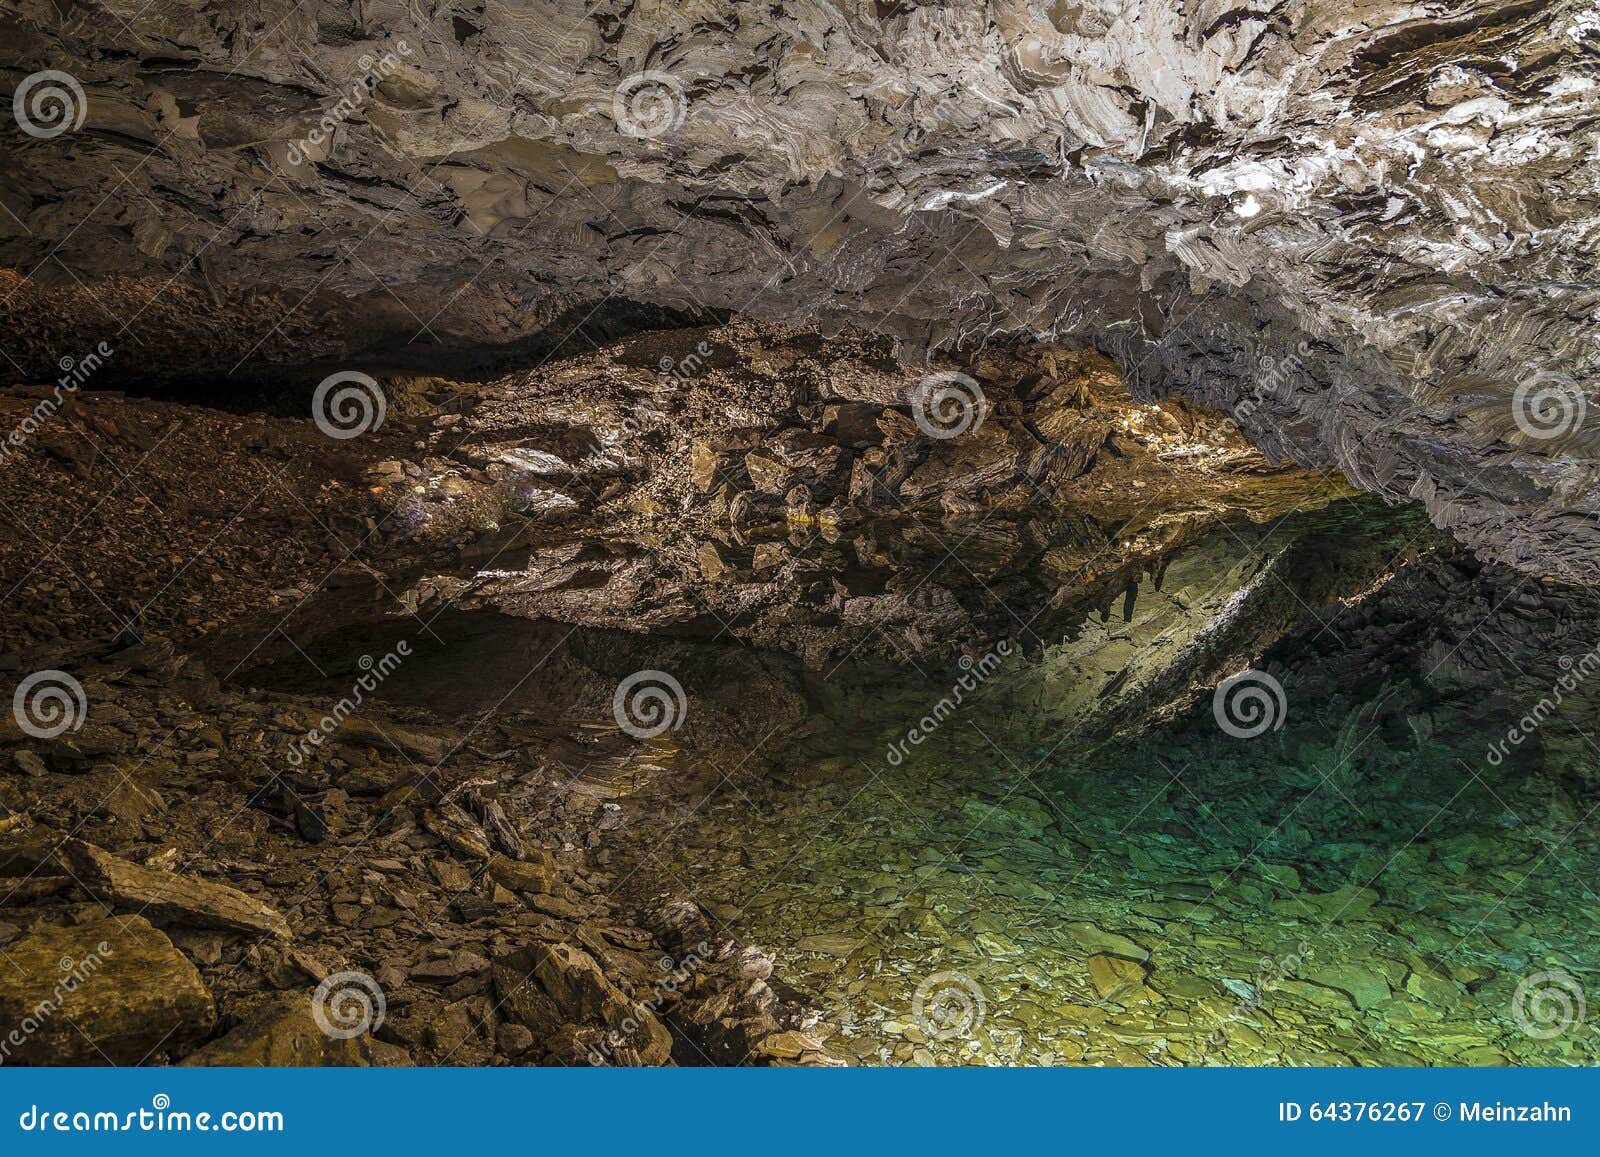 famous barbarossa cave in thuringia